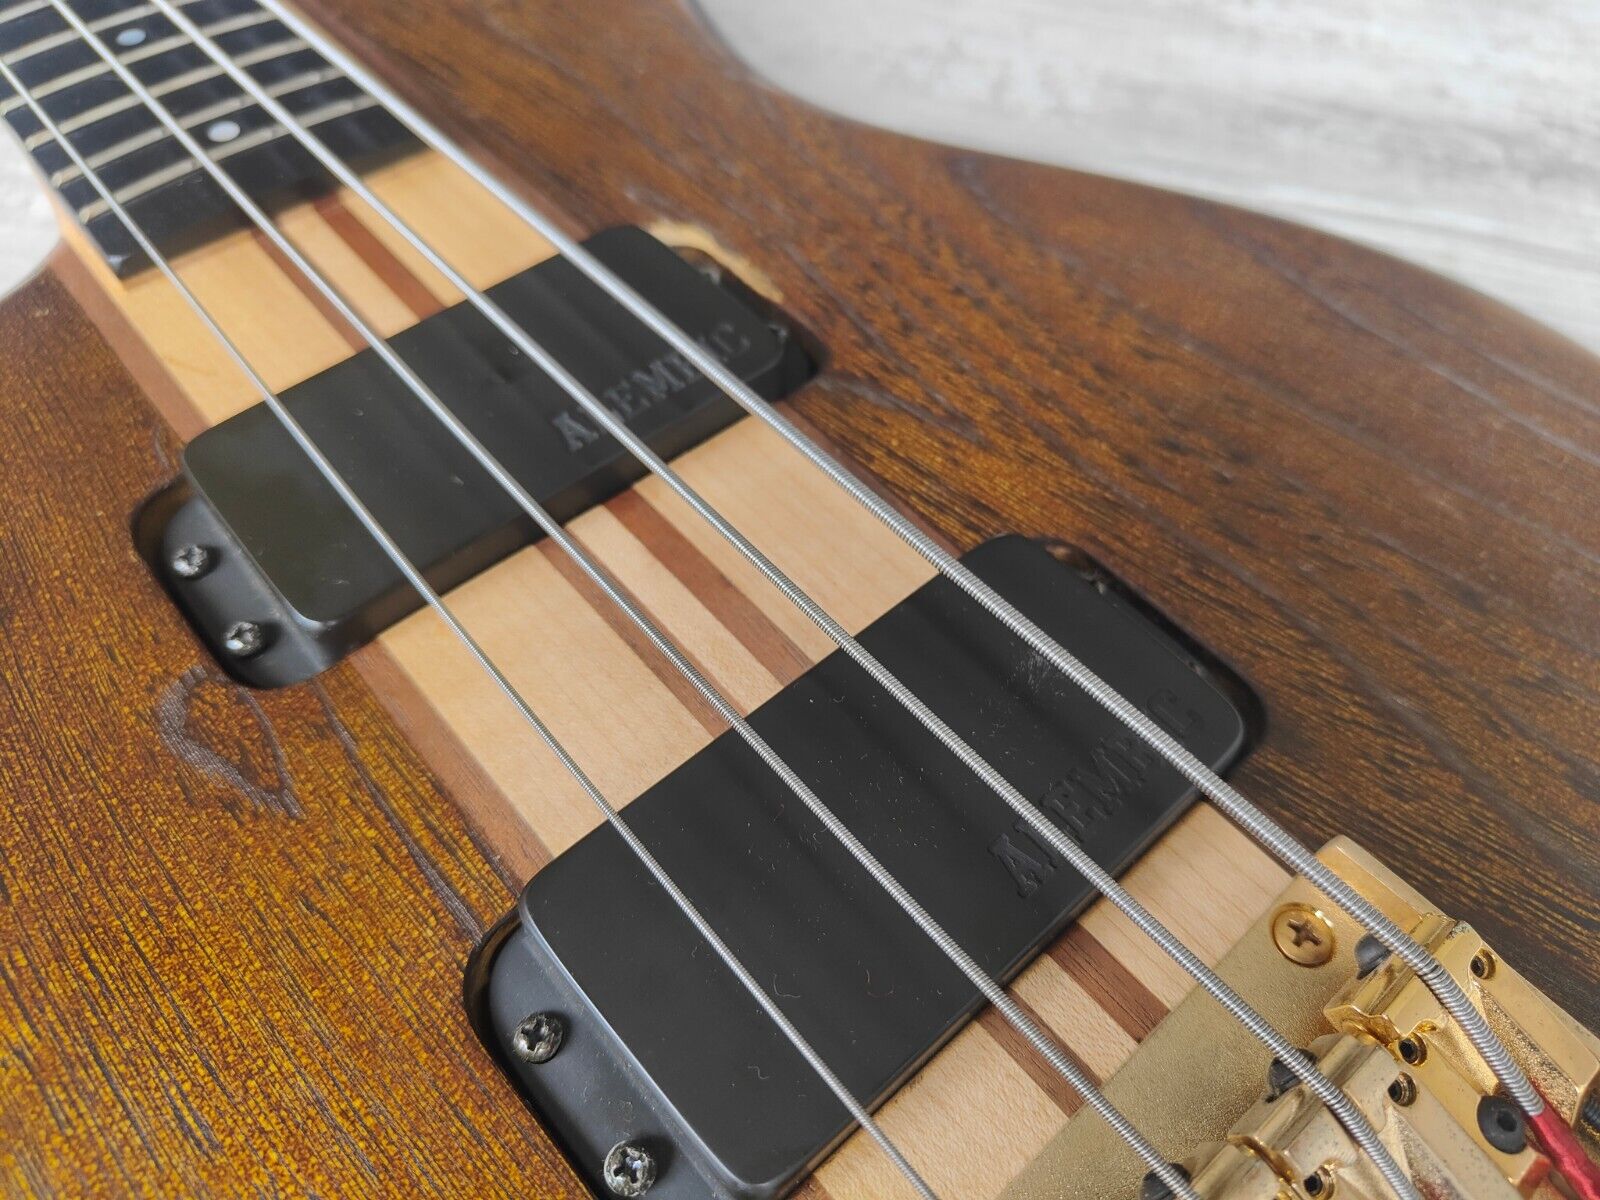 1989 Aria Pro II SB-1200 LH Left Handed Neckthrough Bass (Natural Walnut)